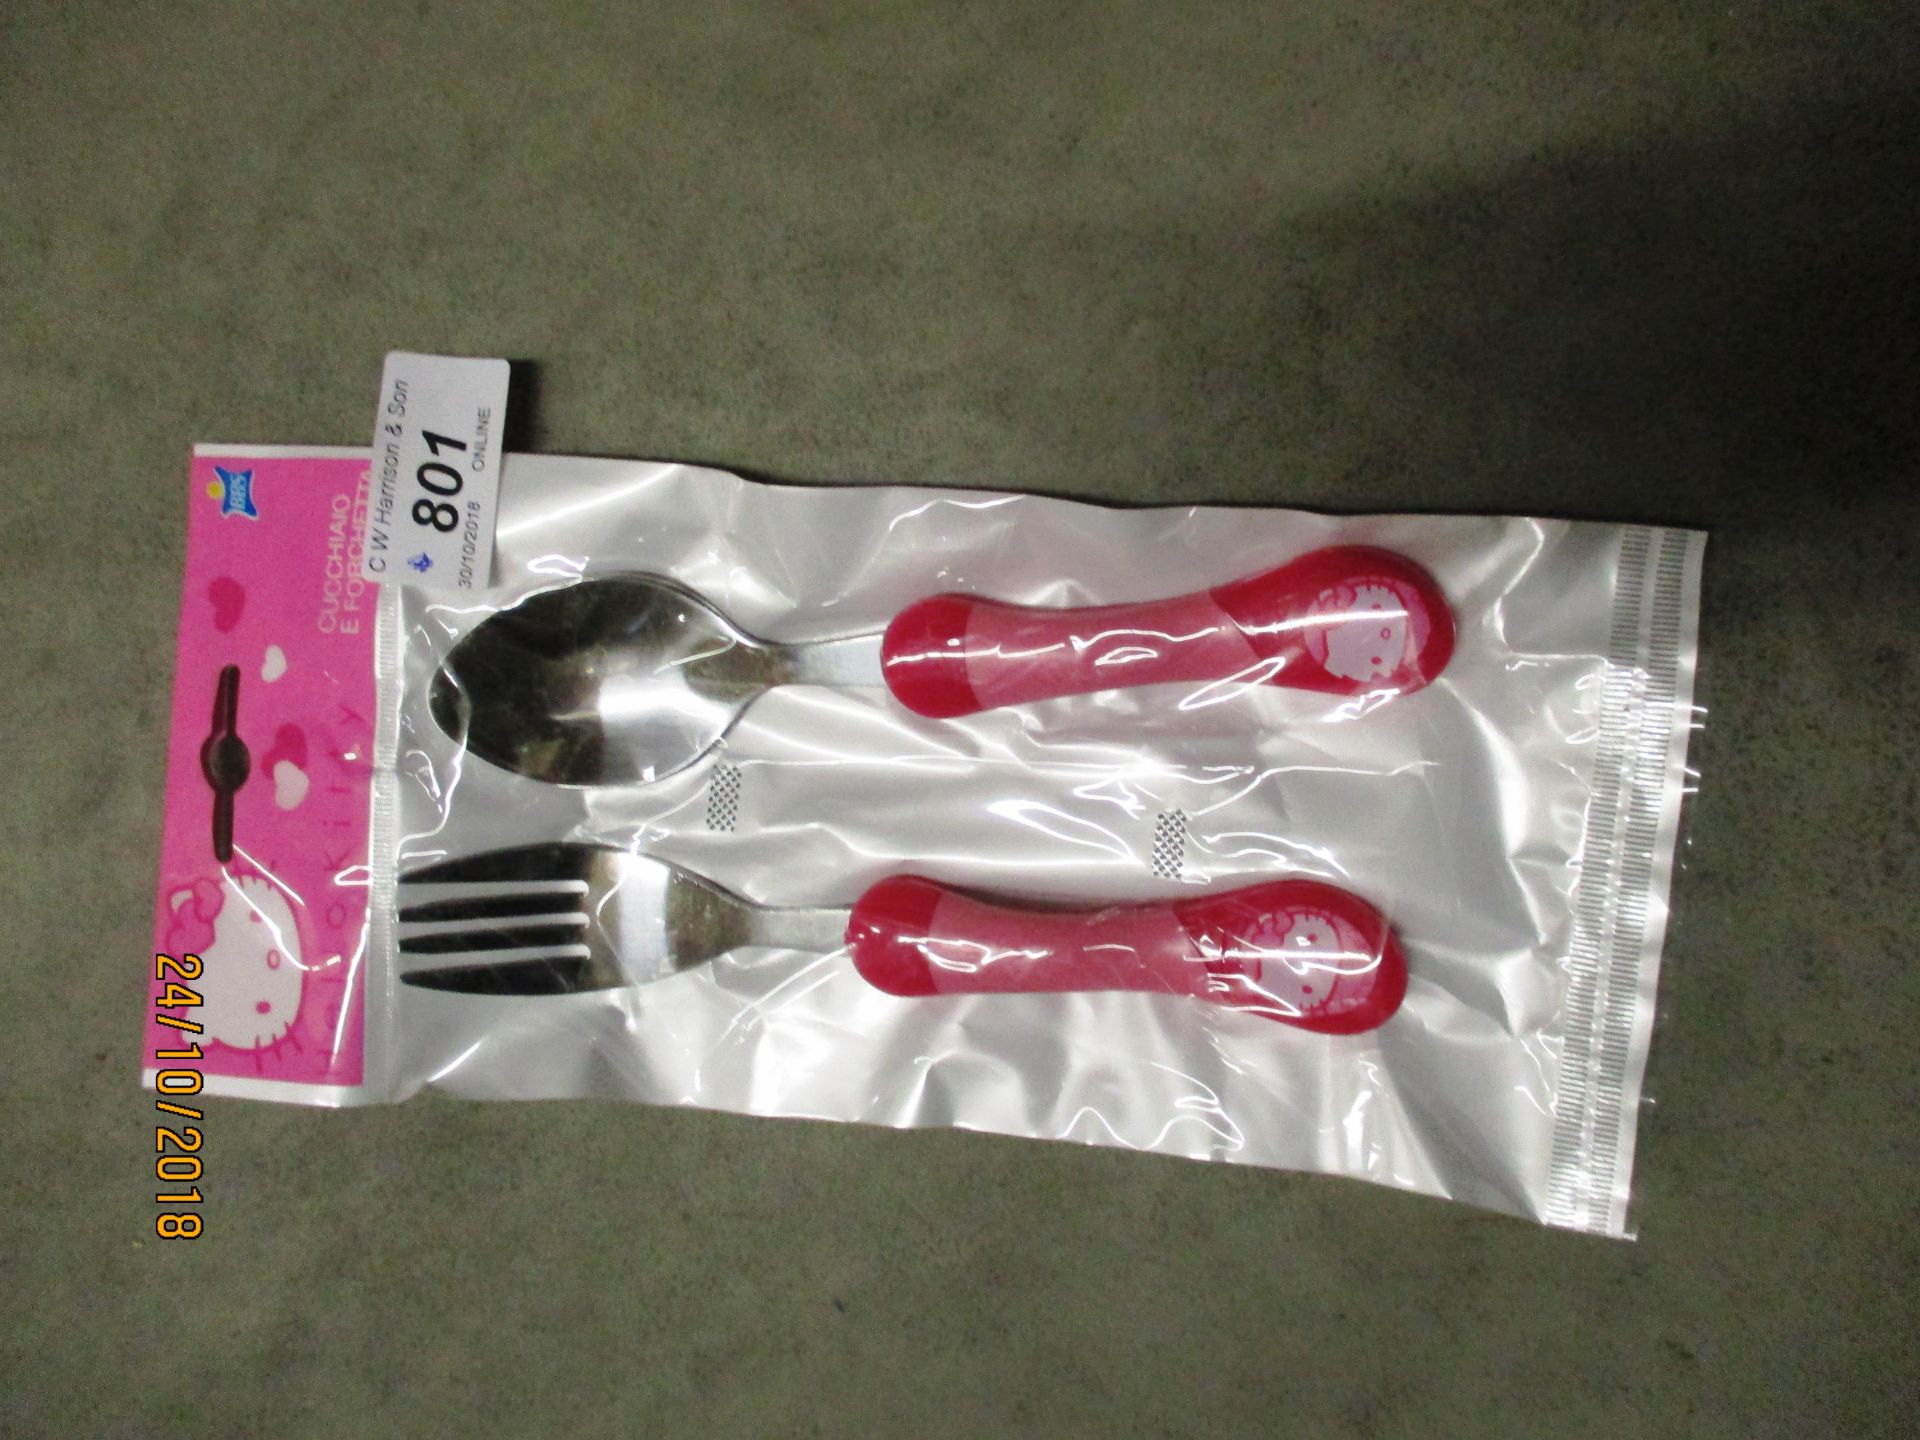 86 x Hello Kitty cutlery sets